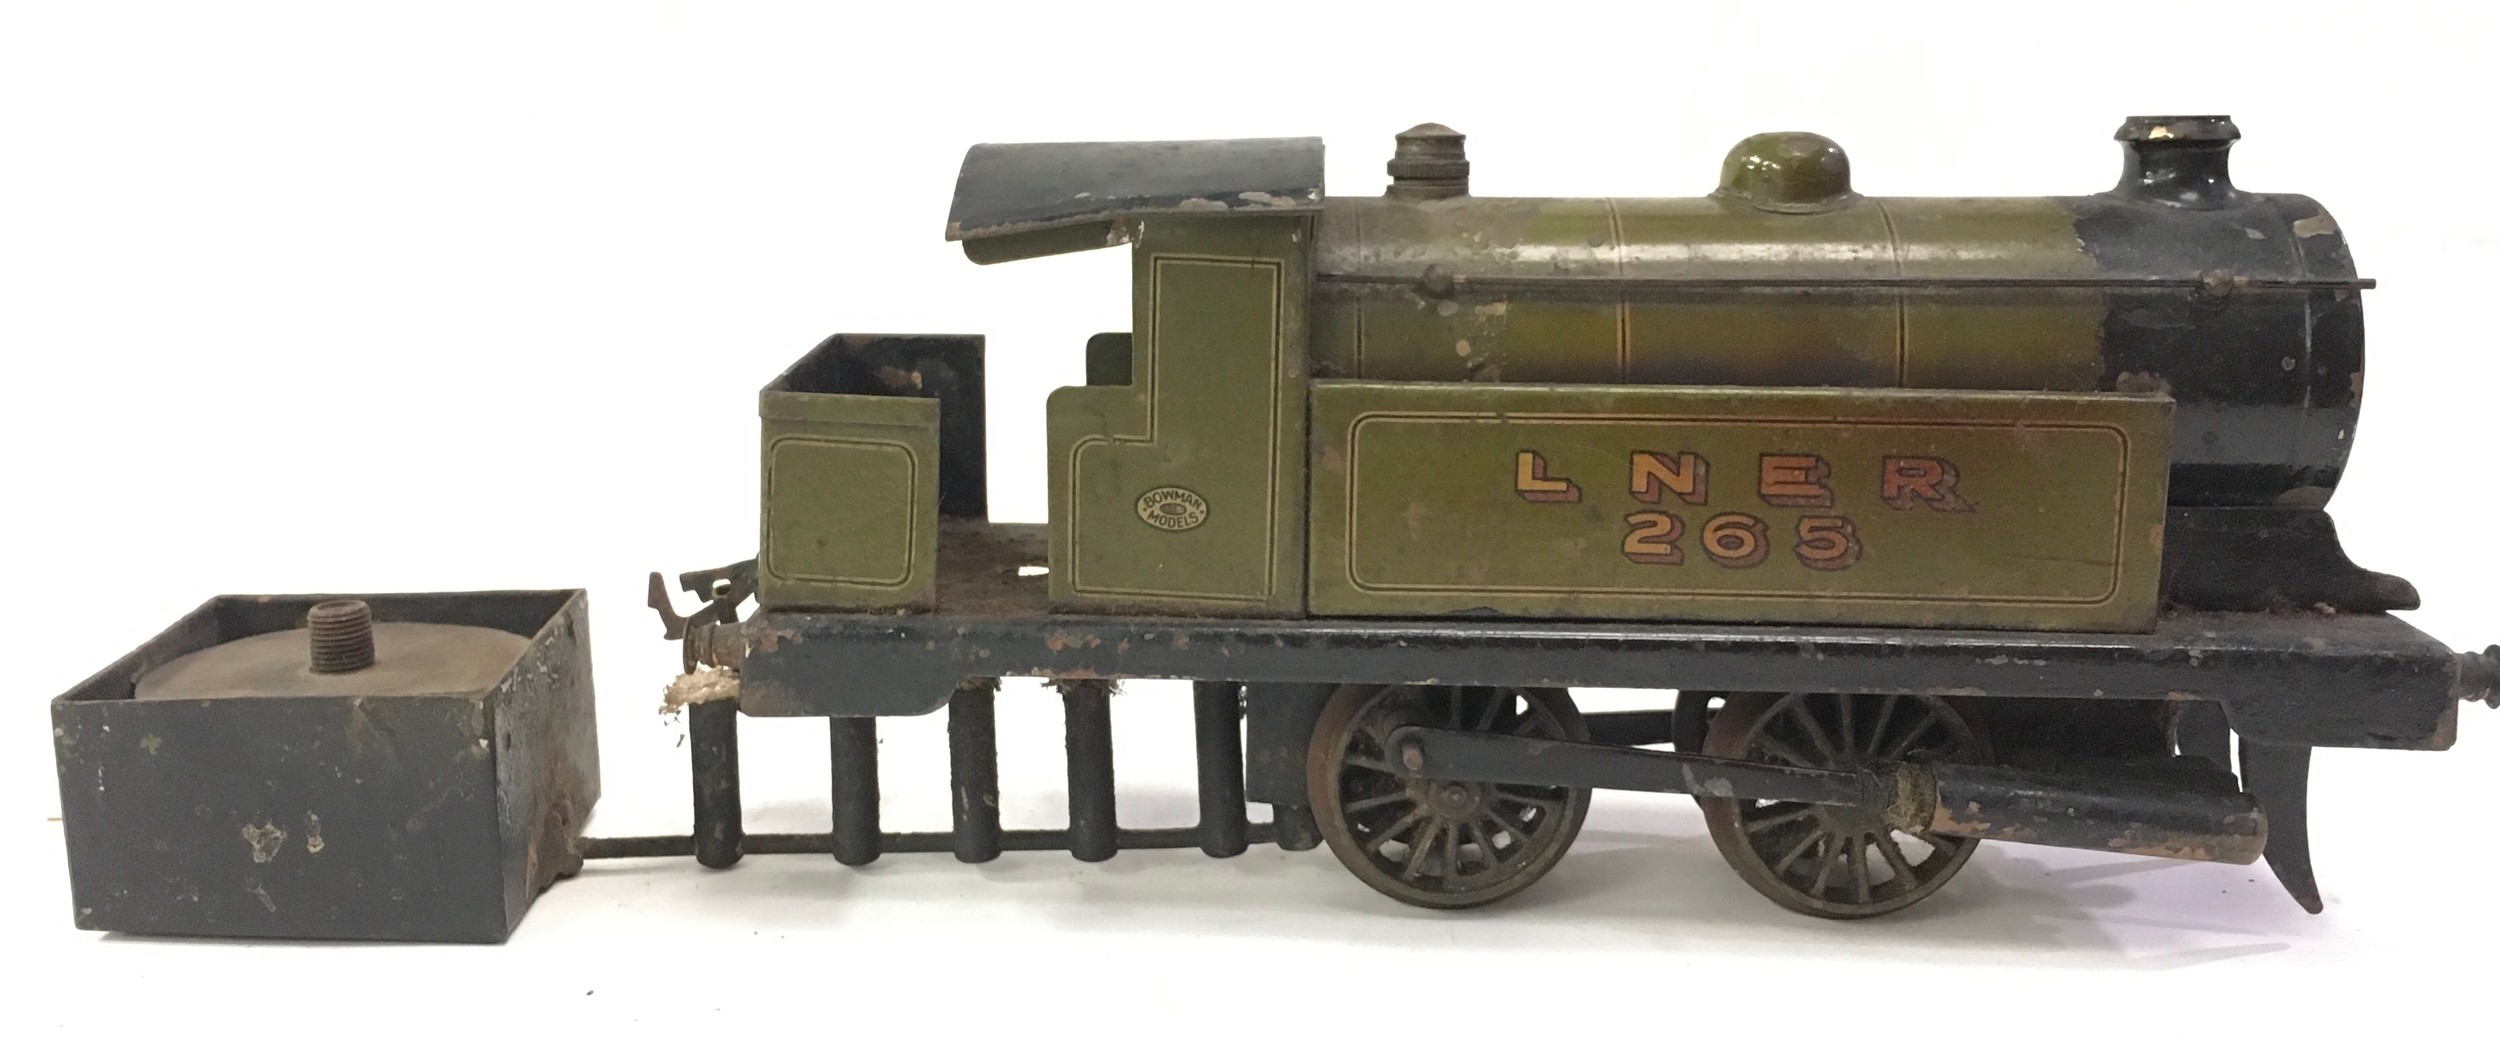 Bowman O Gauge Live Steam LNER 0-4-0 Steam Locomotive No.265 - apple green/black livery with "Bowman